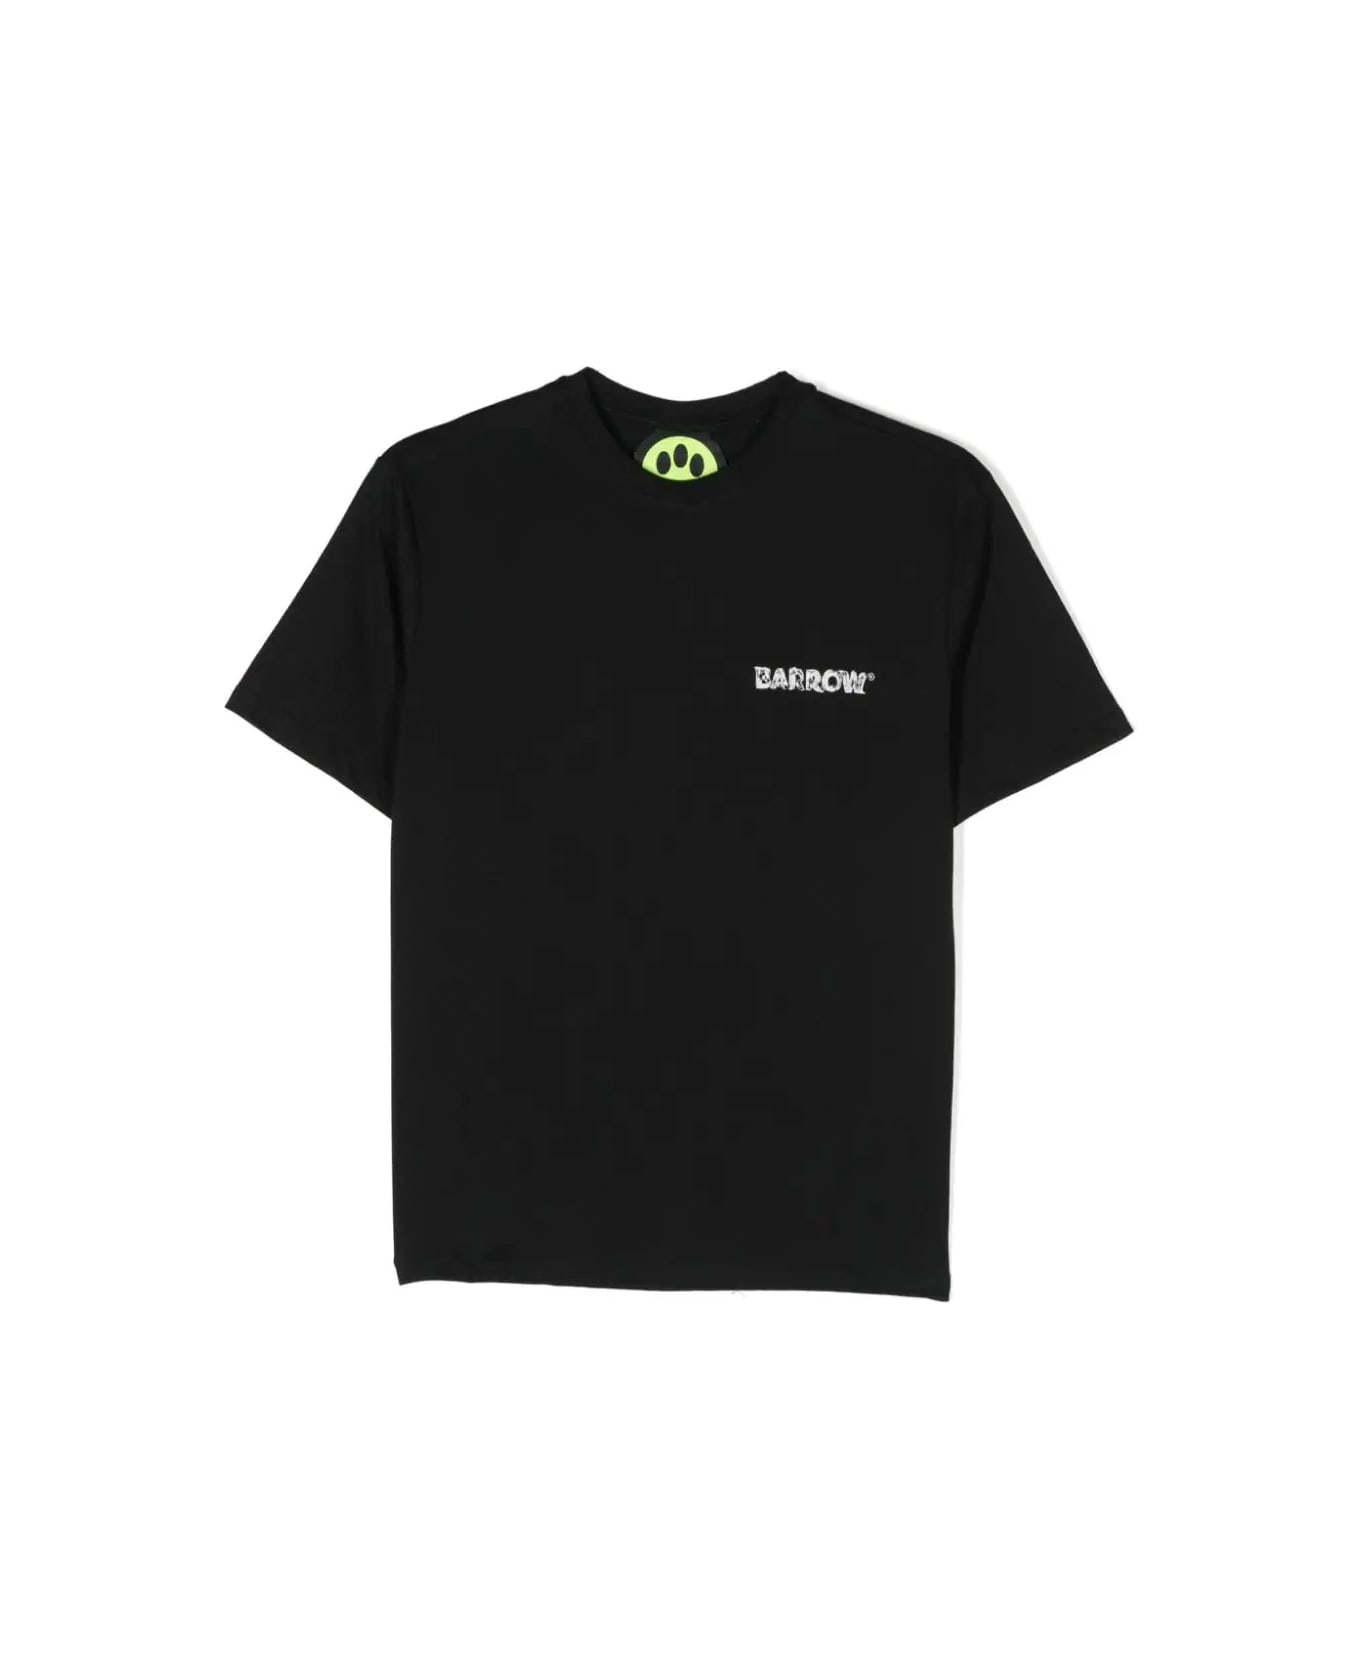 Barrow Black T-shirt With Logo And Graphics - Nero/Black